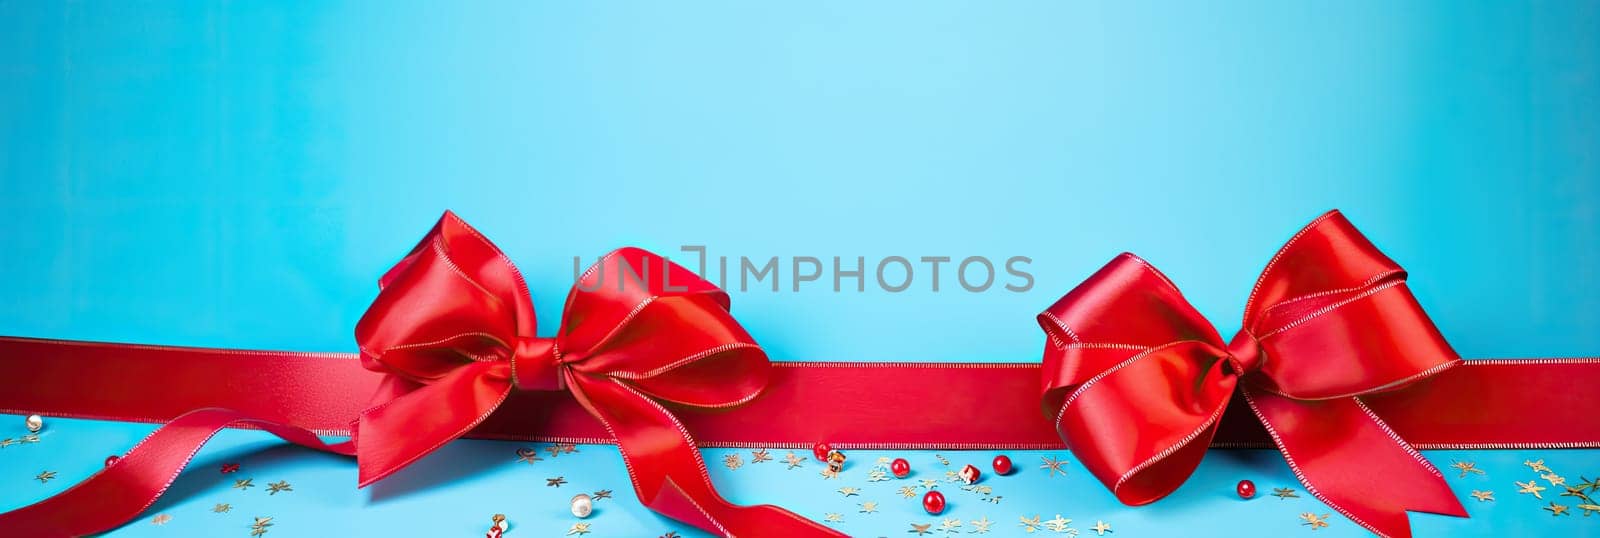 A bright red ribbon on a pale blue background, symbolizing a holiday, festive mood, joy and celebration.